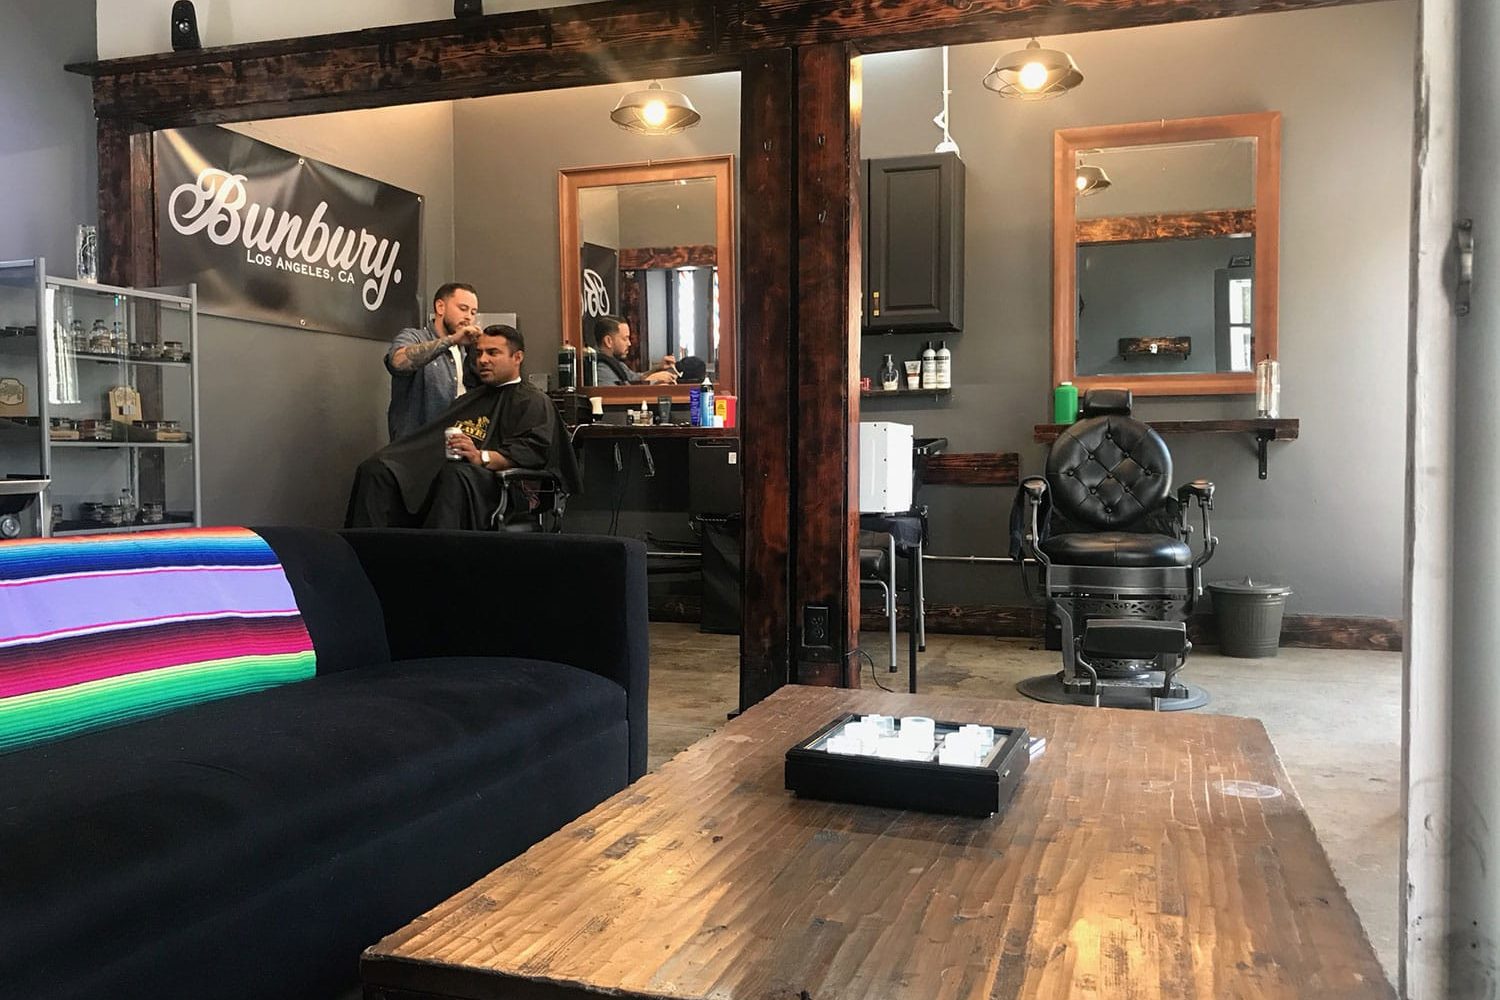 Bunbury Barbershop